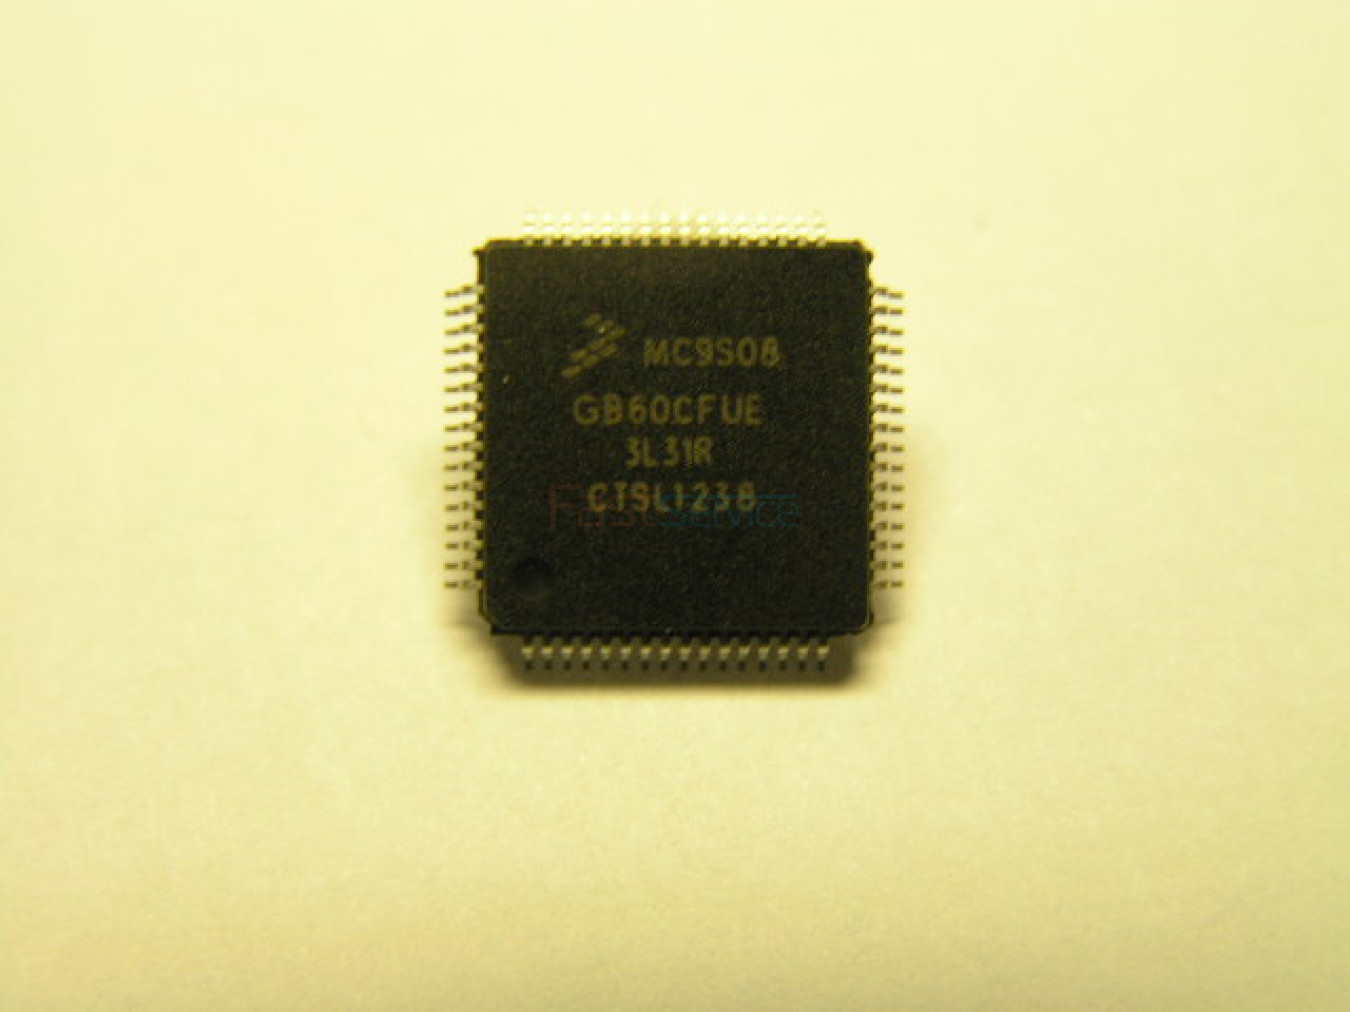 Процессор на модуль INDESIT ARISTON ARCADIA MC9S08GB60 чистый